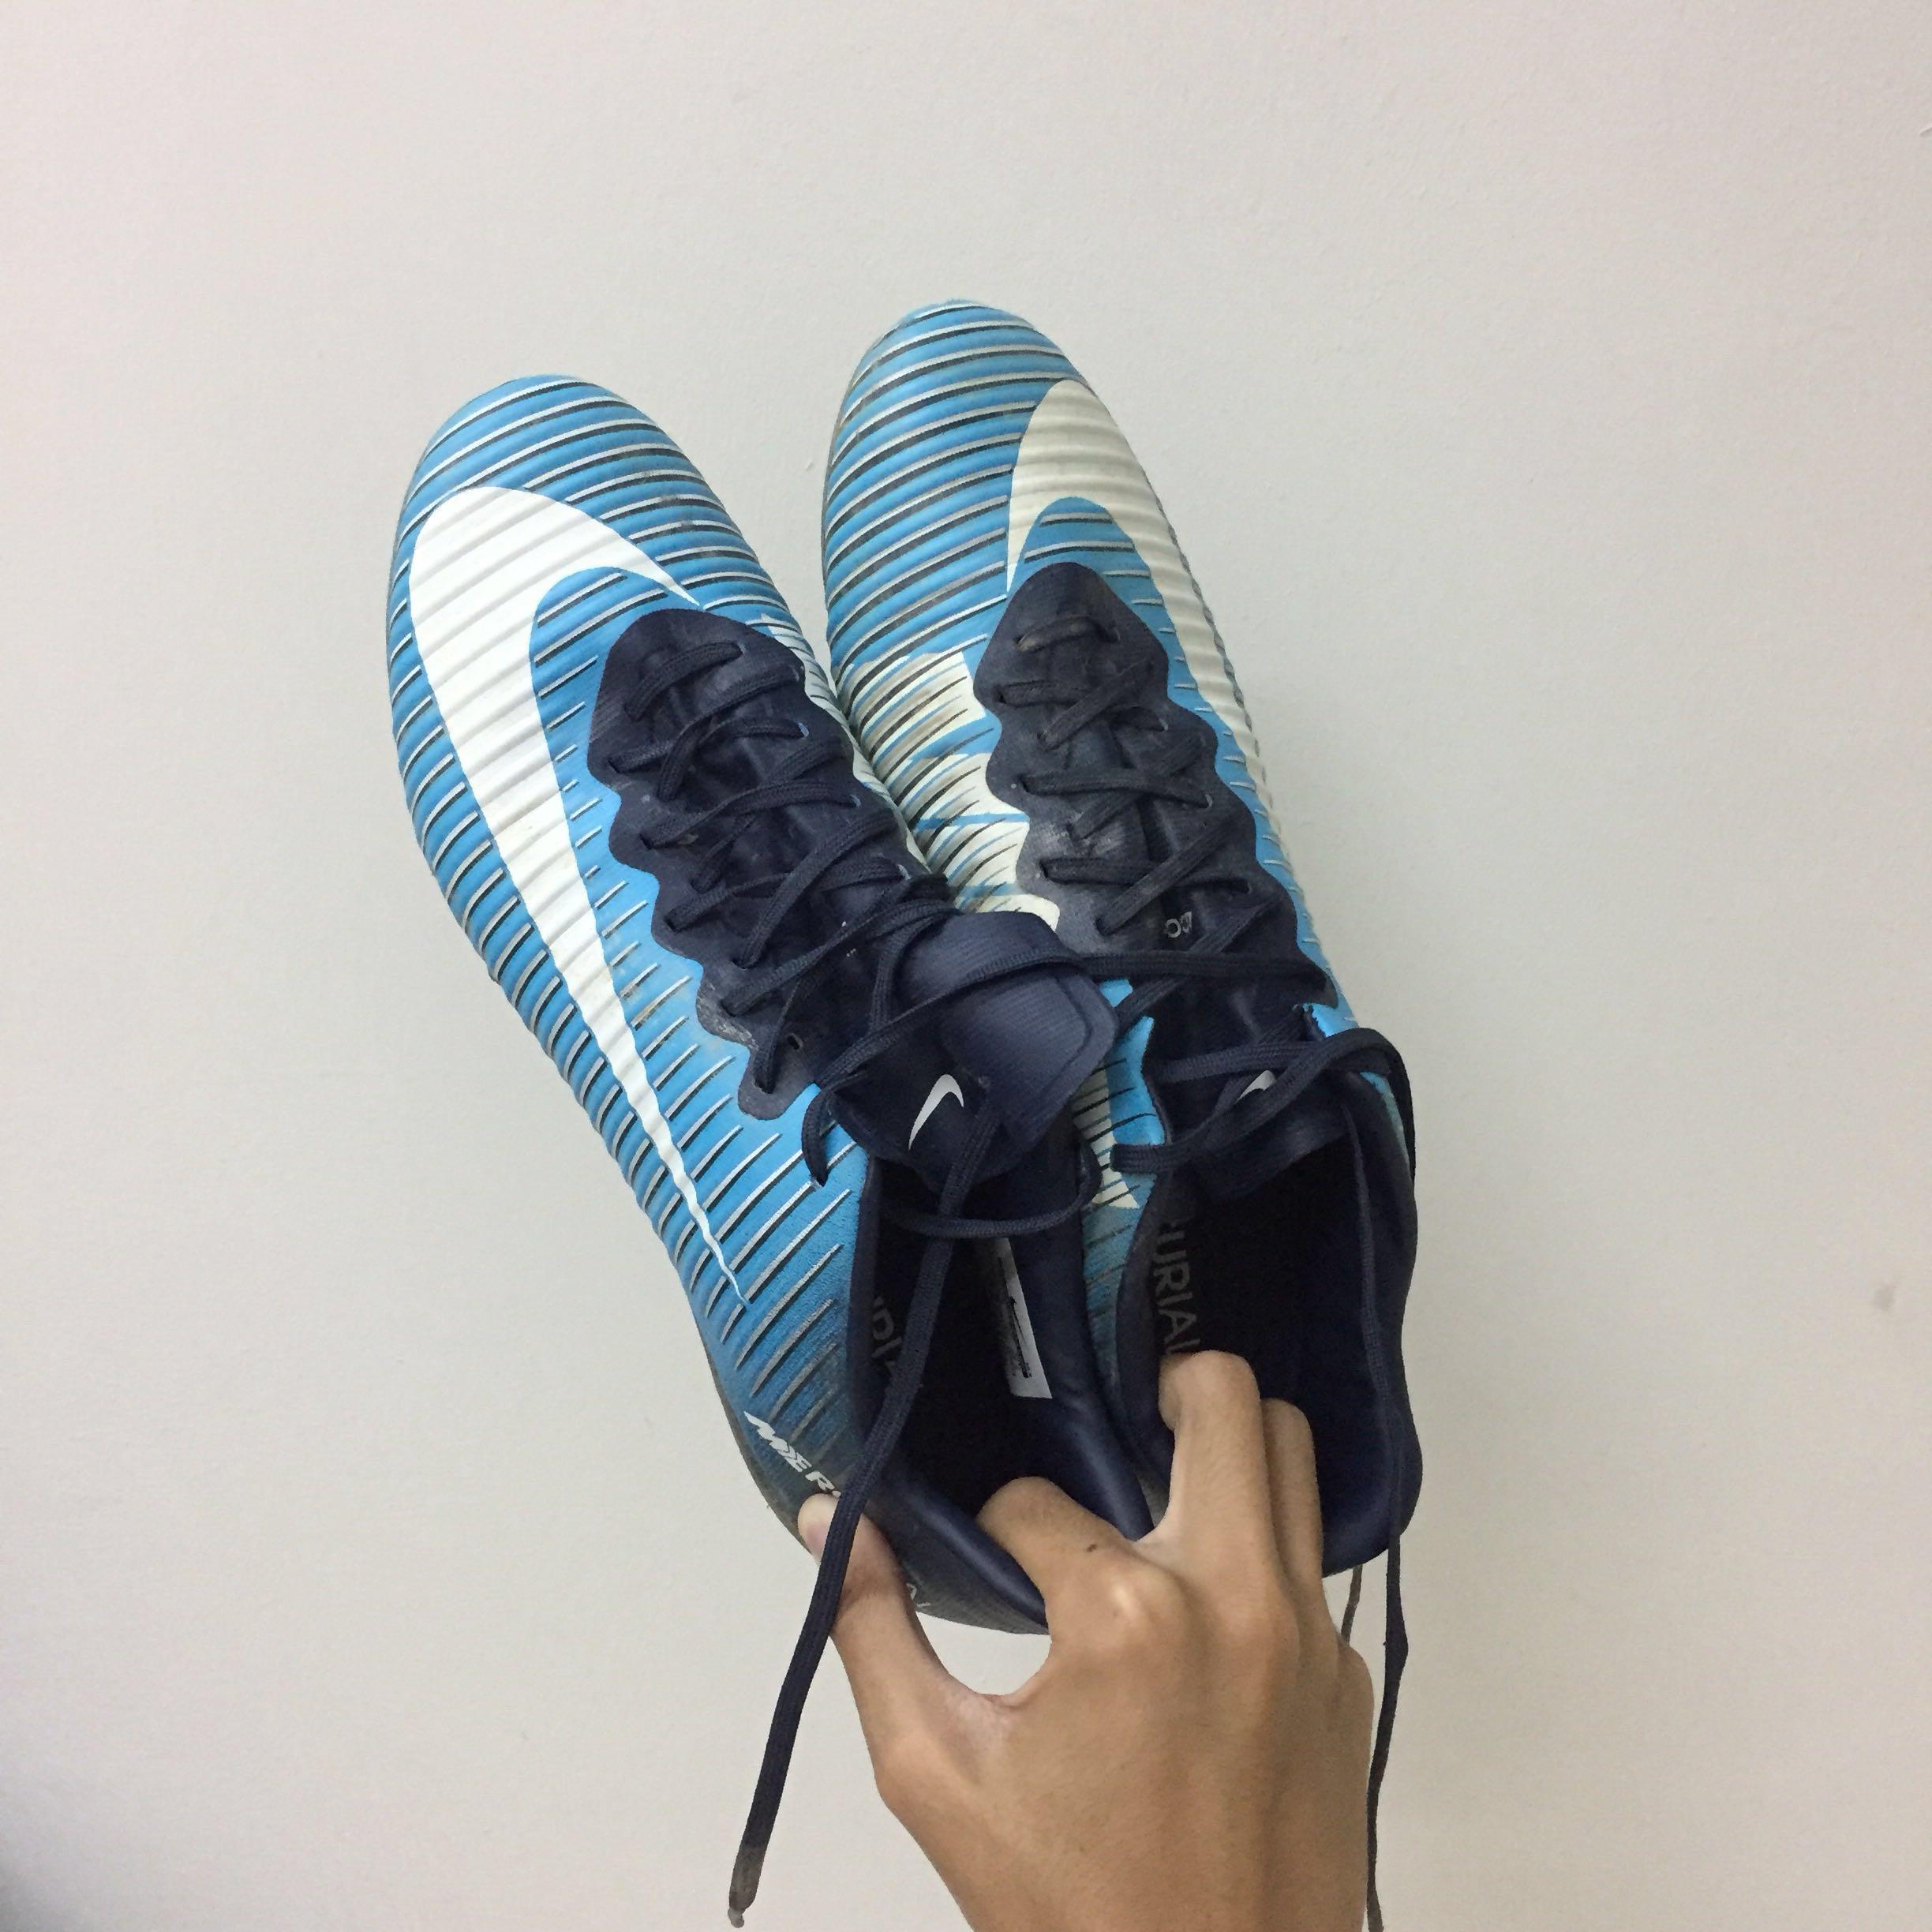 Nike Men's Mercurial Vapor Xi Fg Football Boots, Blue